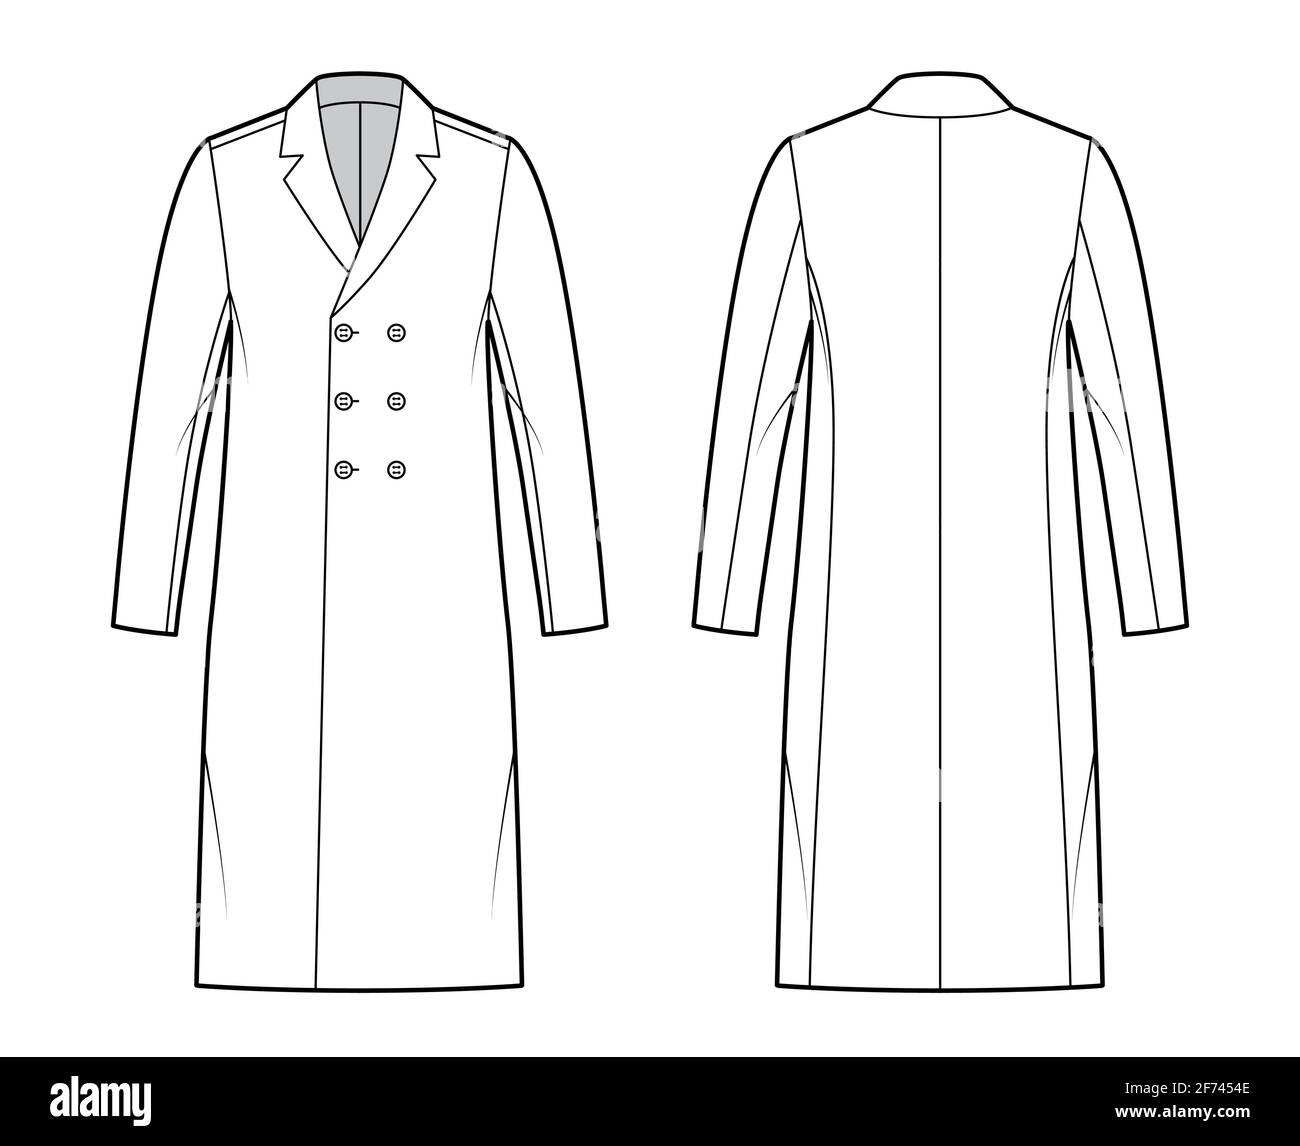 Illustrator Fashion Sketches - Jacket Template 043 - download